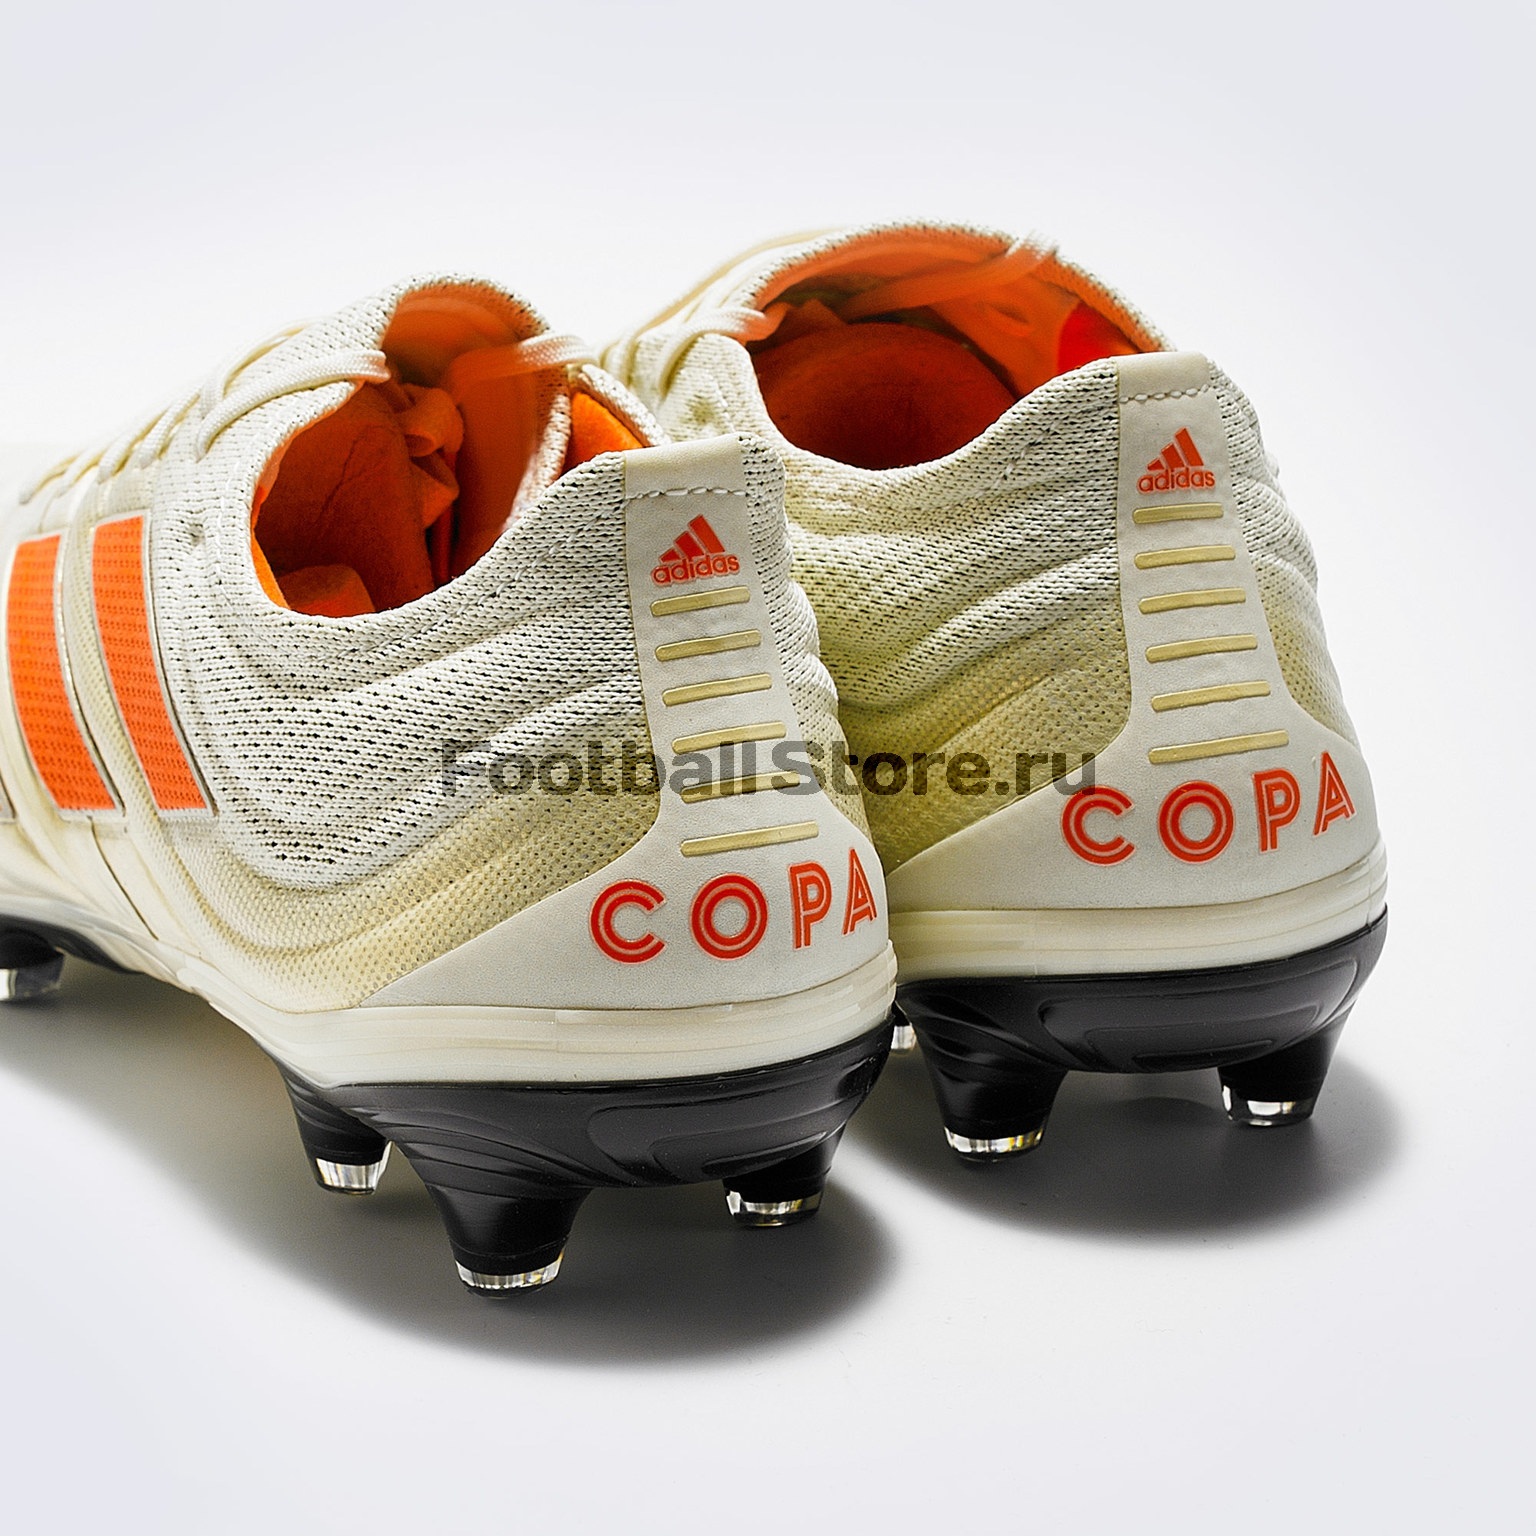 Бутсы Adidas Copa 19.1 FG BB9185